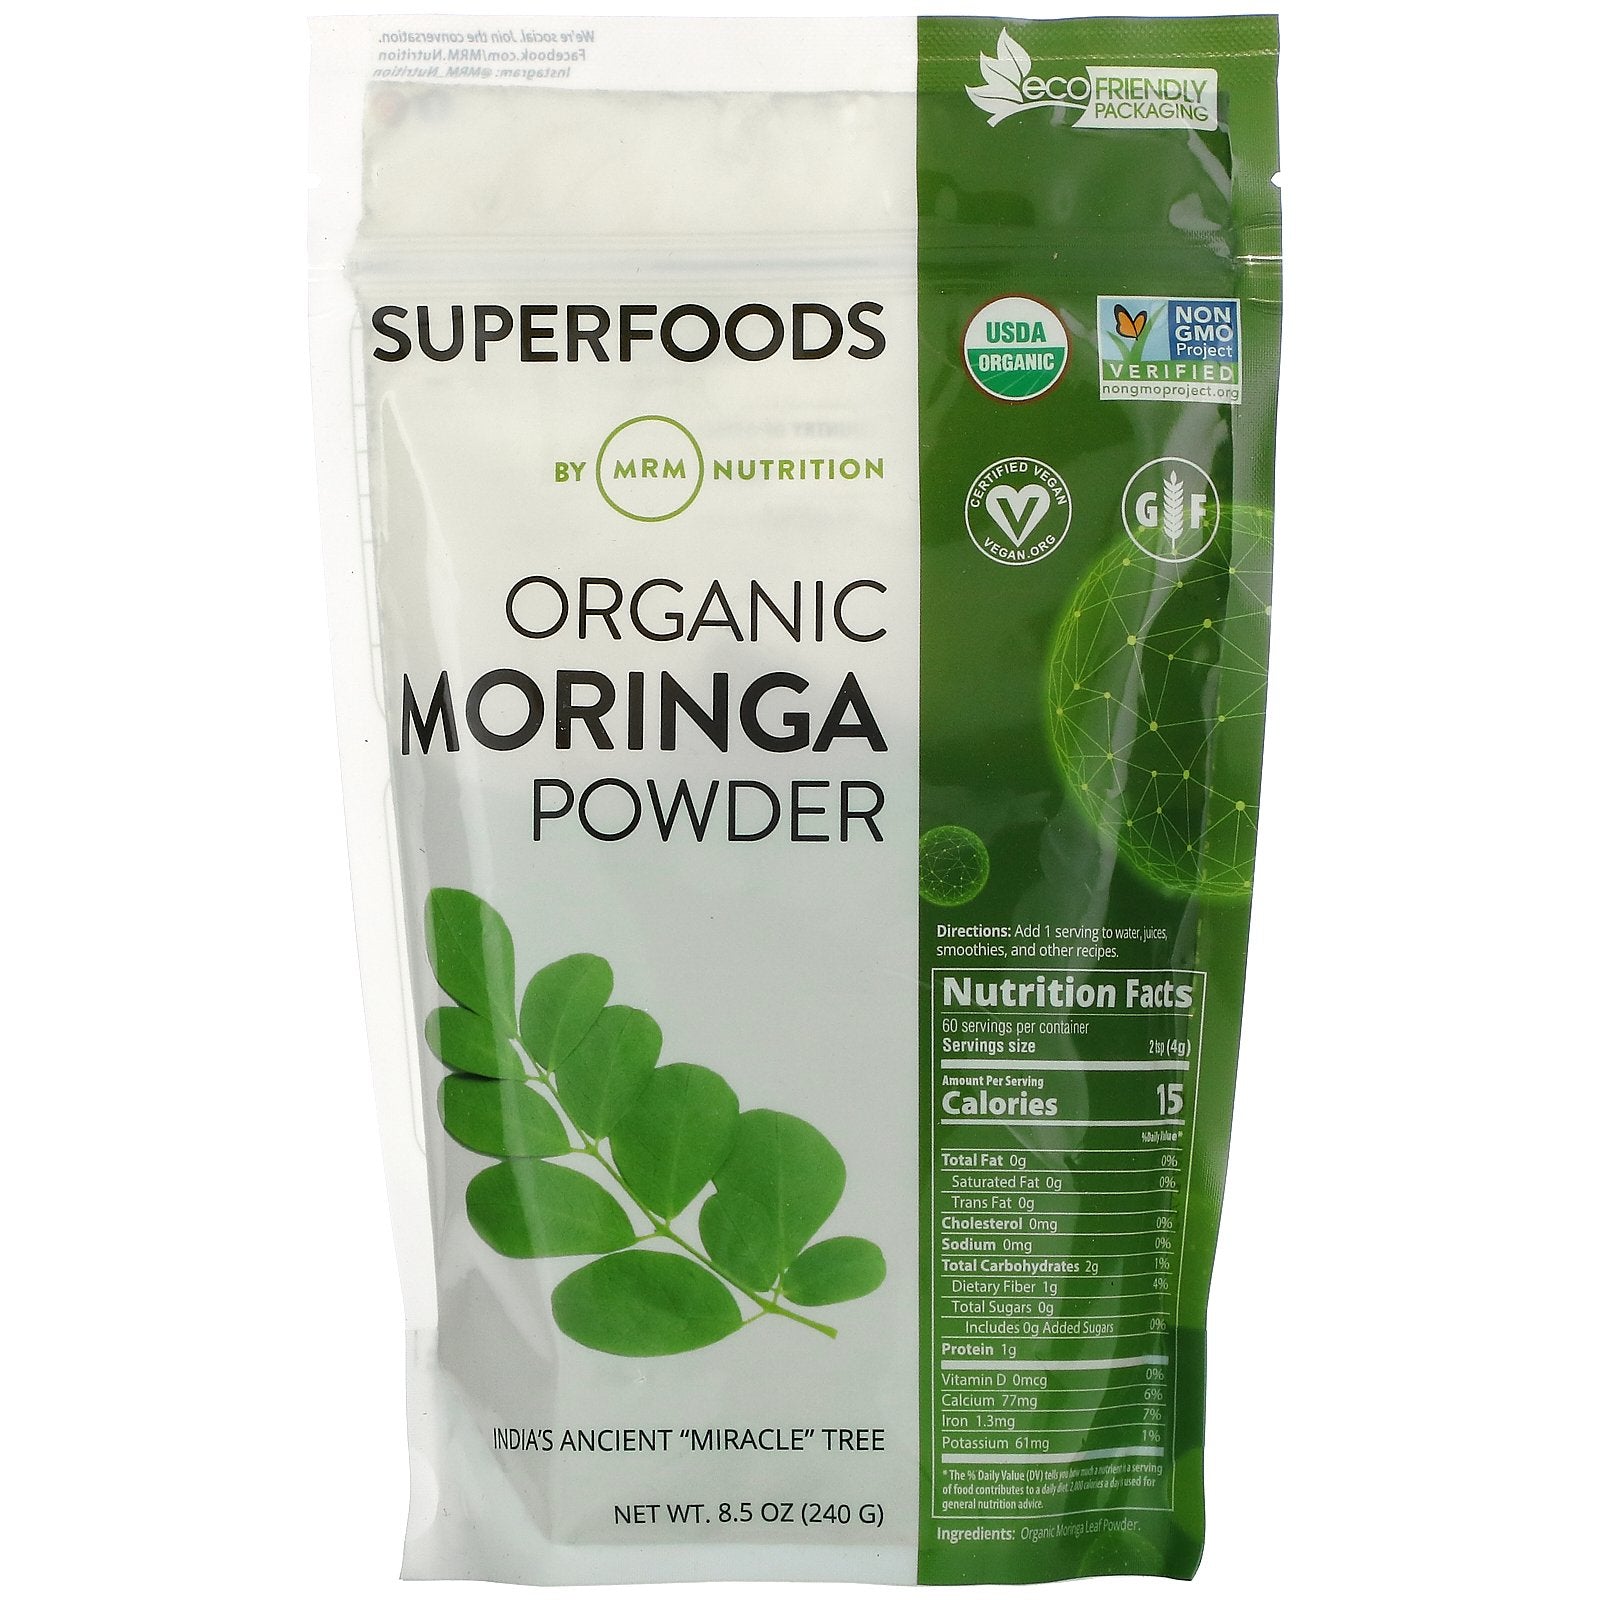 MRM, Organic Moringa Powder, 8.5 oz (240 g)